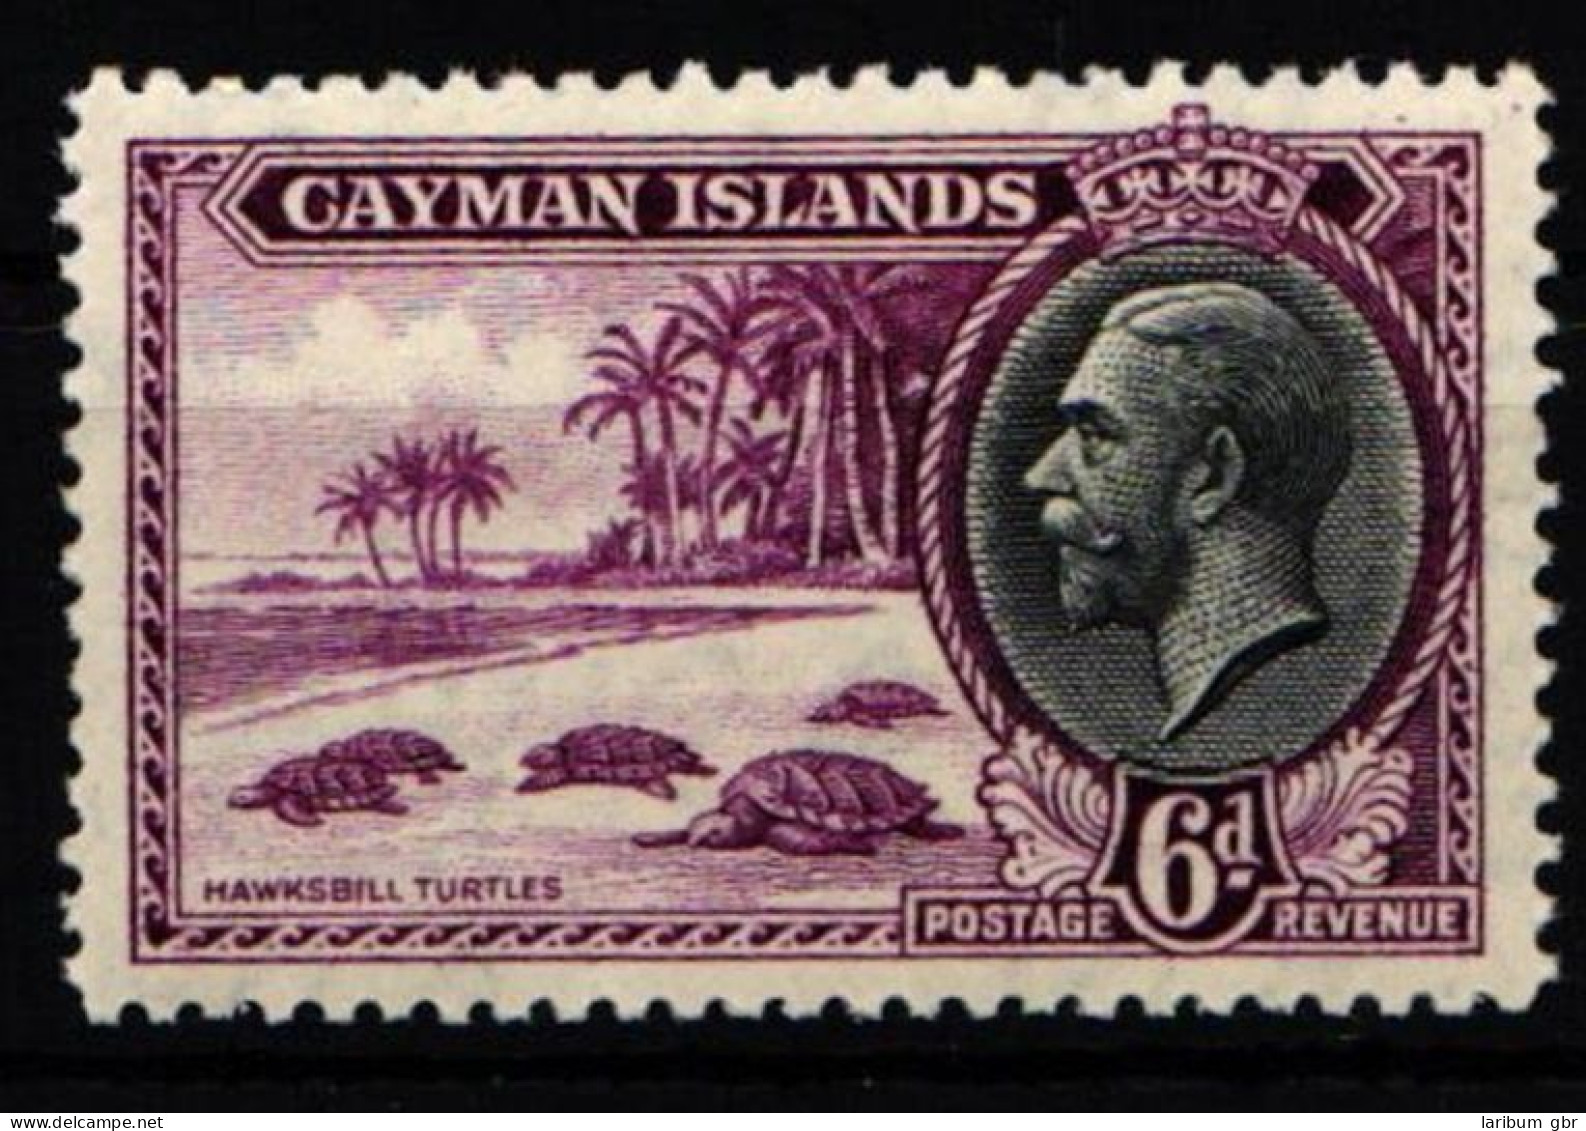 Kaimaninseln 93 Postfrisch Schildkröten #NF035 - Cayman Islands